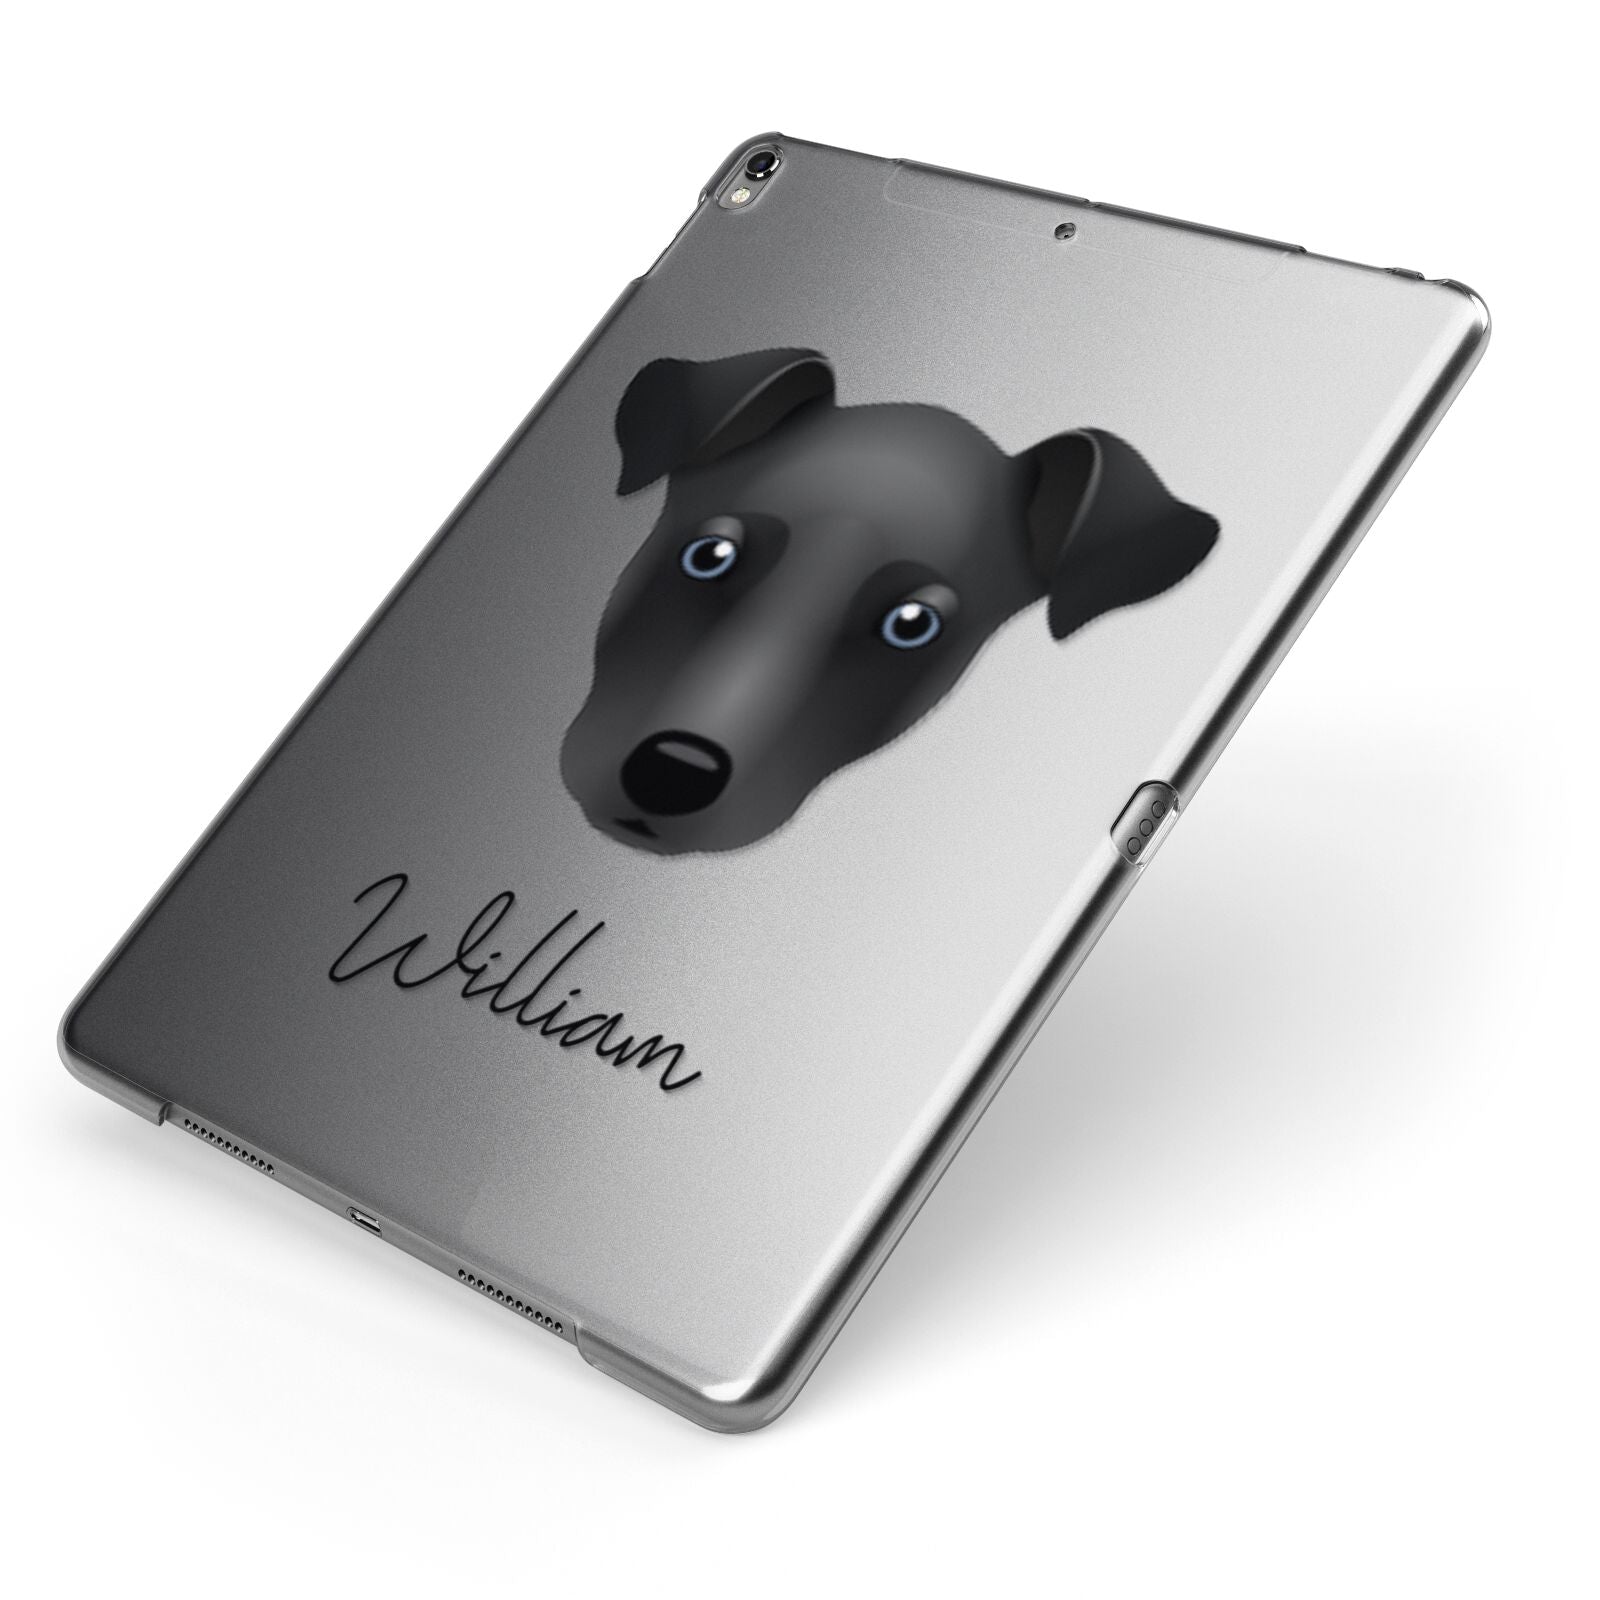 Chi Staffy Bull Personalised Apple iPad Case on Grey iPad Side View